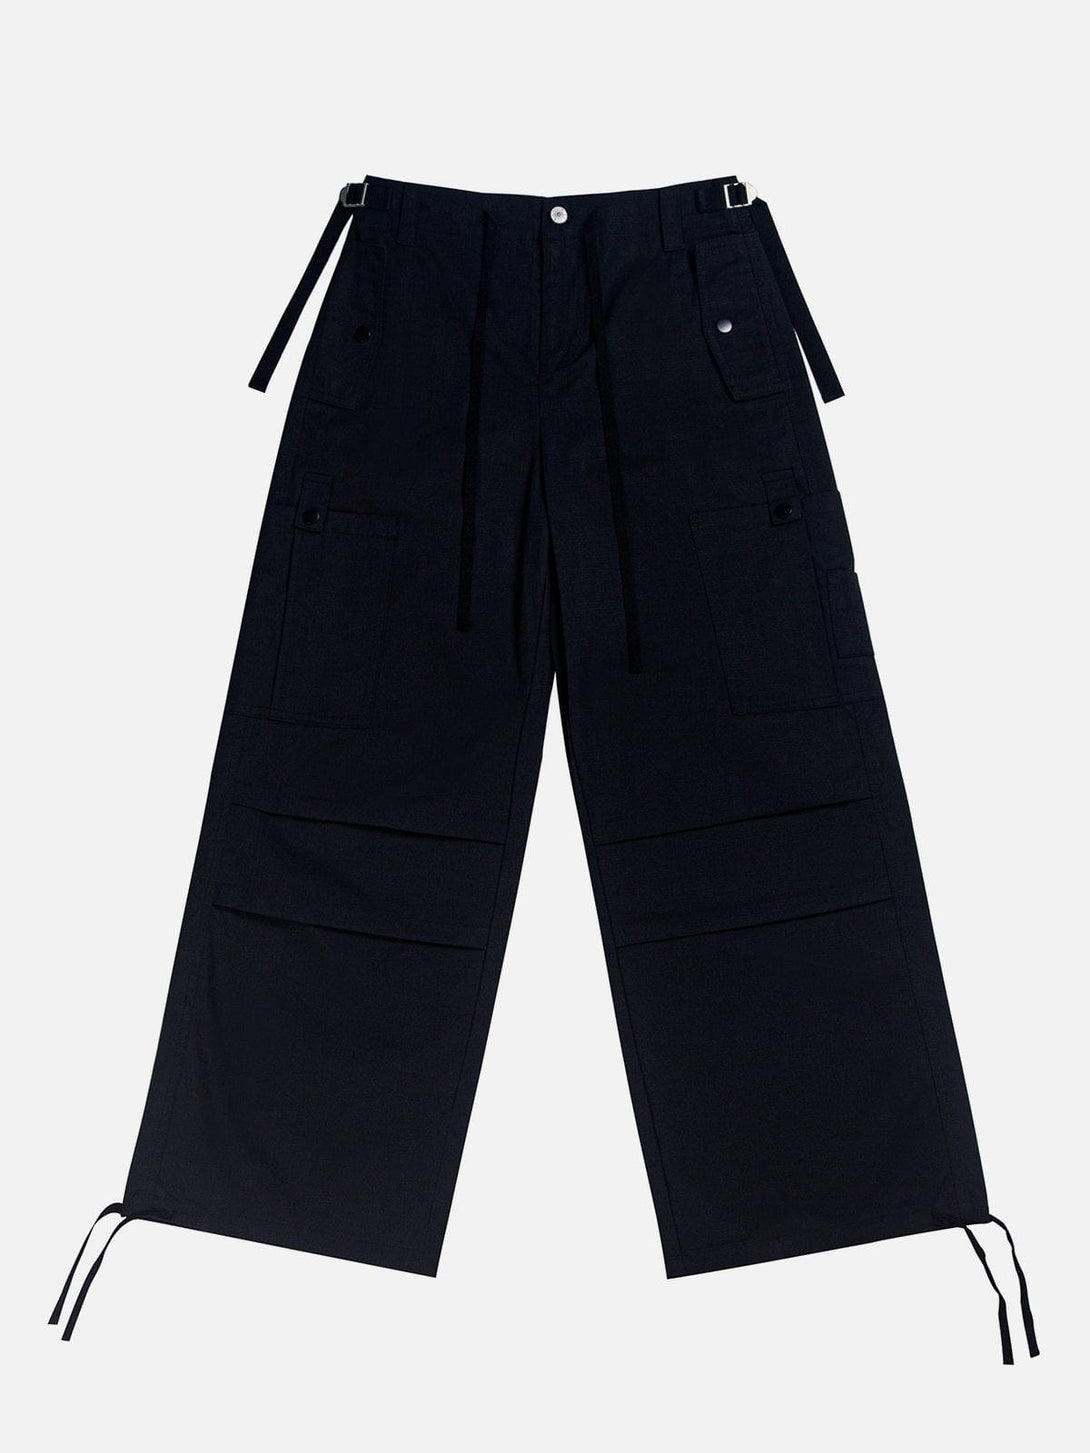 Majesda® - Multi-rope Cargo Pants outfit ideas streetwear fashion